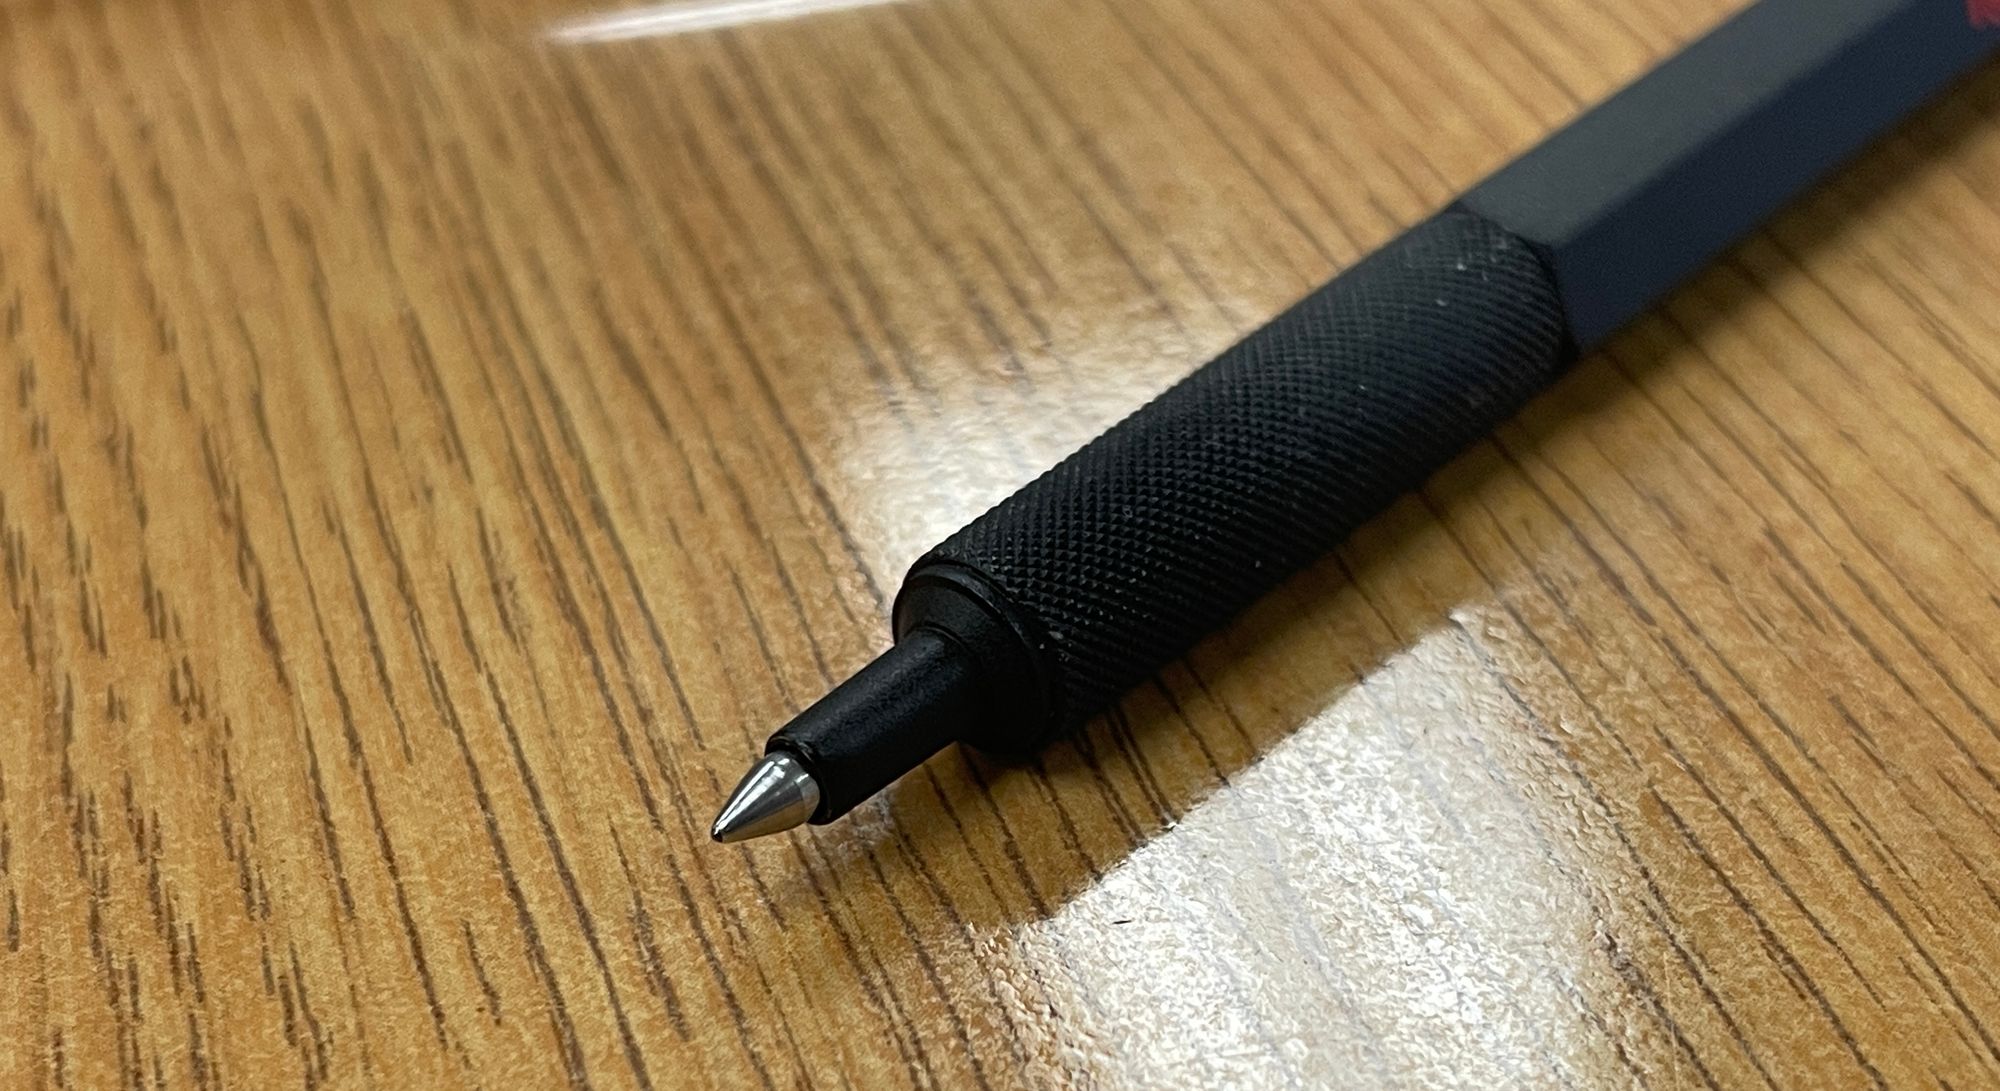 Review: Rotring 600 Ballpoint Pen